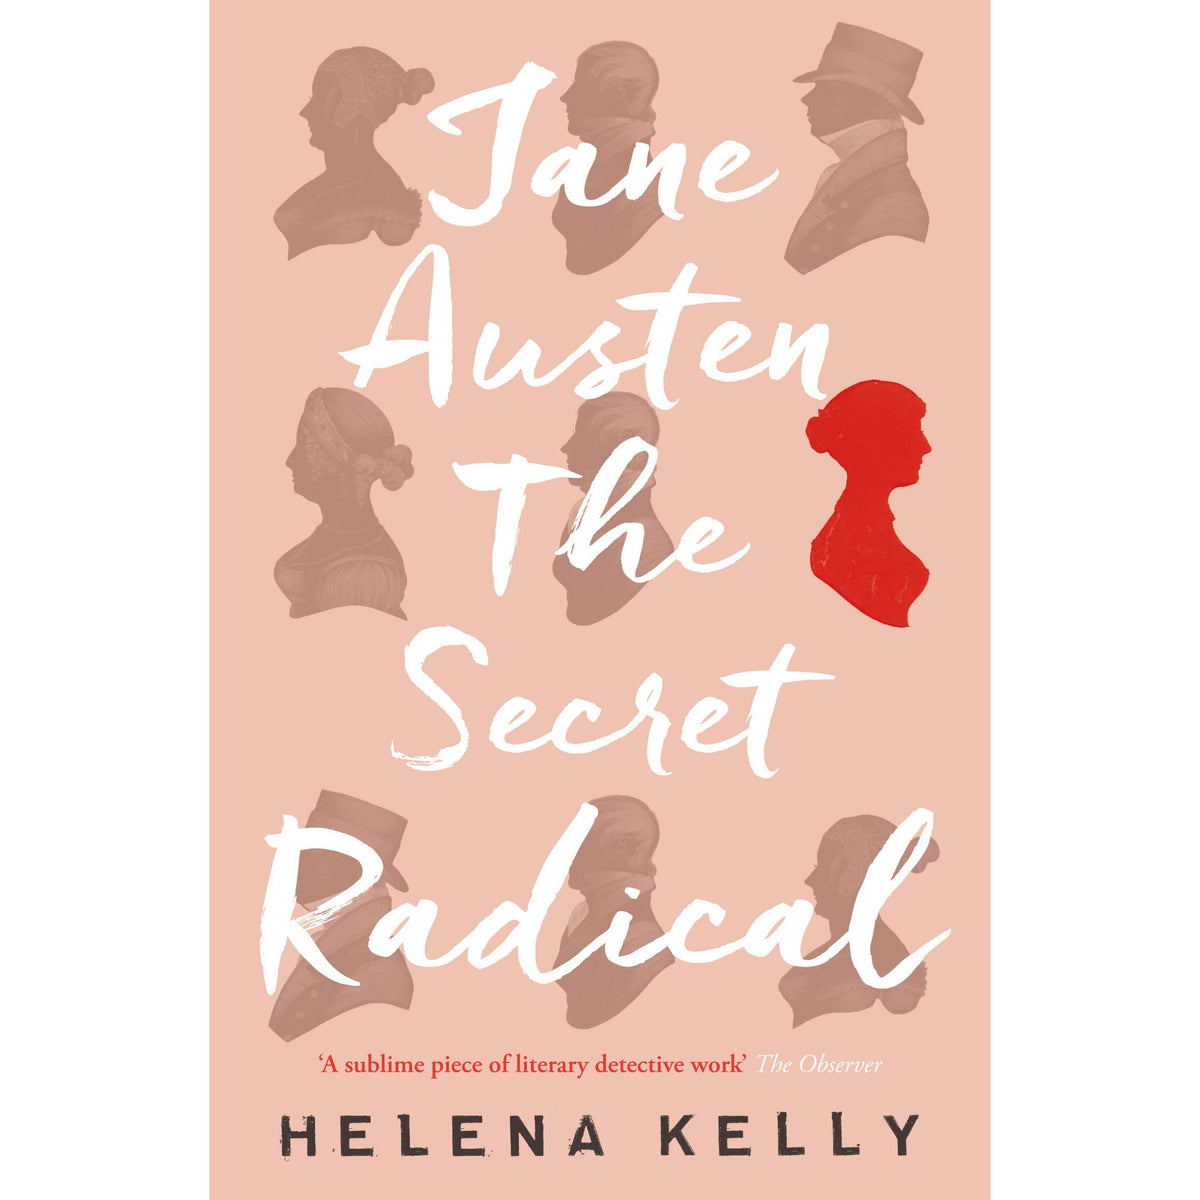 jane austen the secret radical by helena kelly